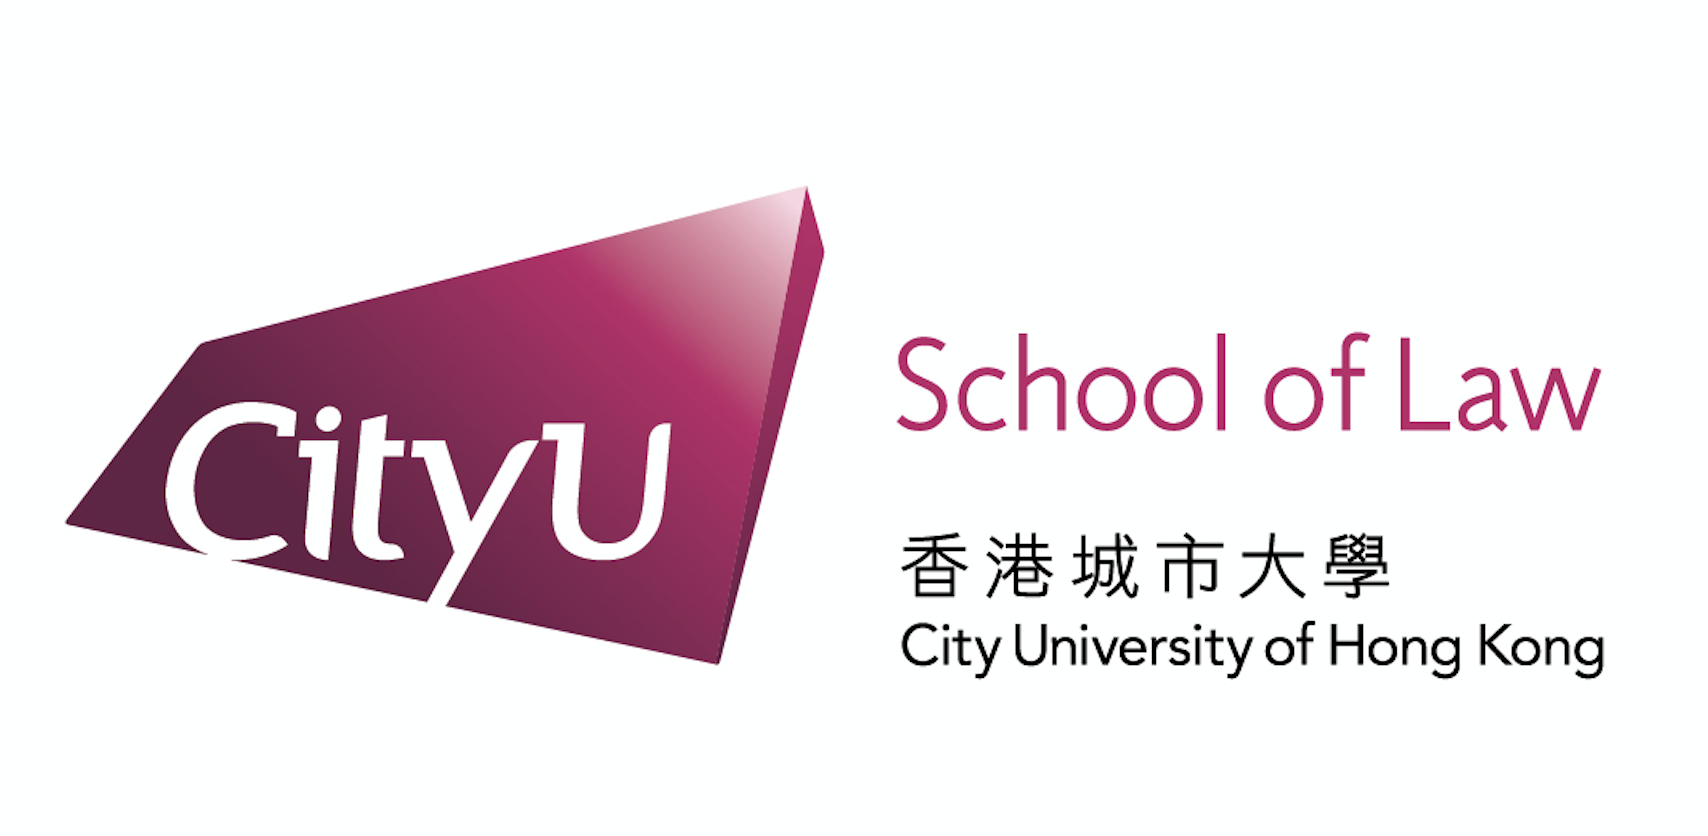 City University of Hong Kong - School of Law 